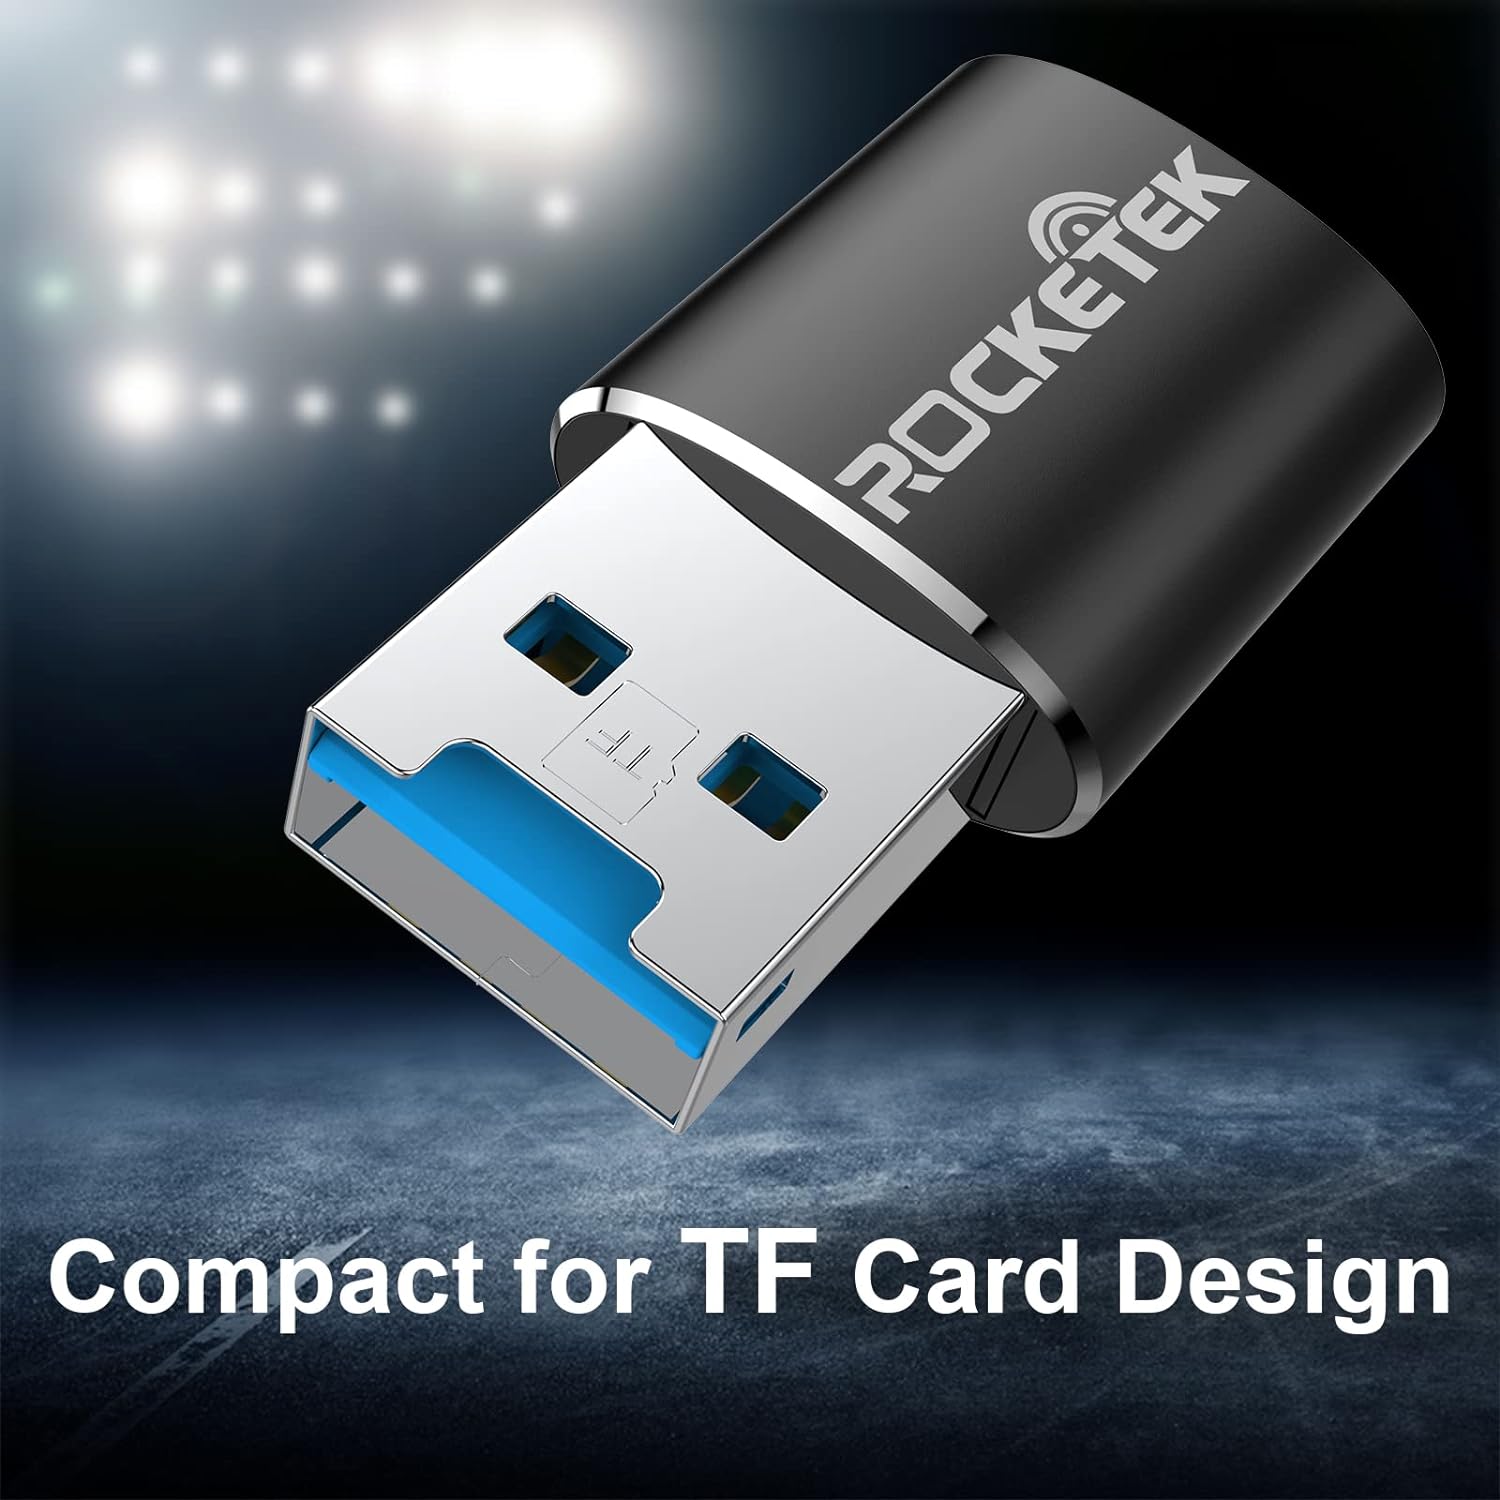 Rocketek Aluminum USB 3.0 Portable Memory Card Reader Adapter for Micro SD Card / TF Card Reader Adapter